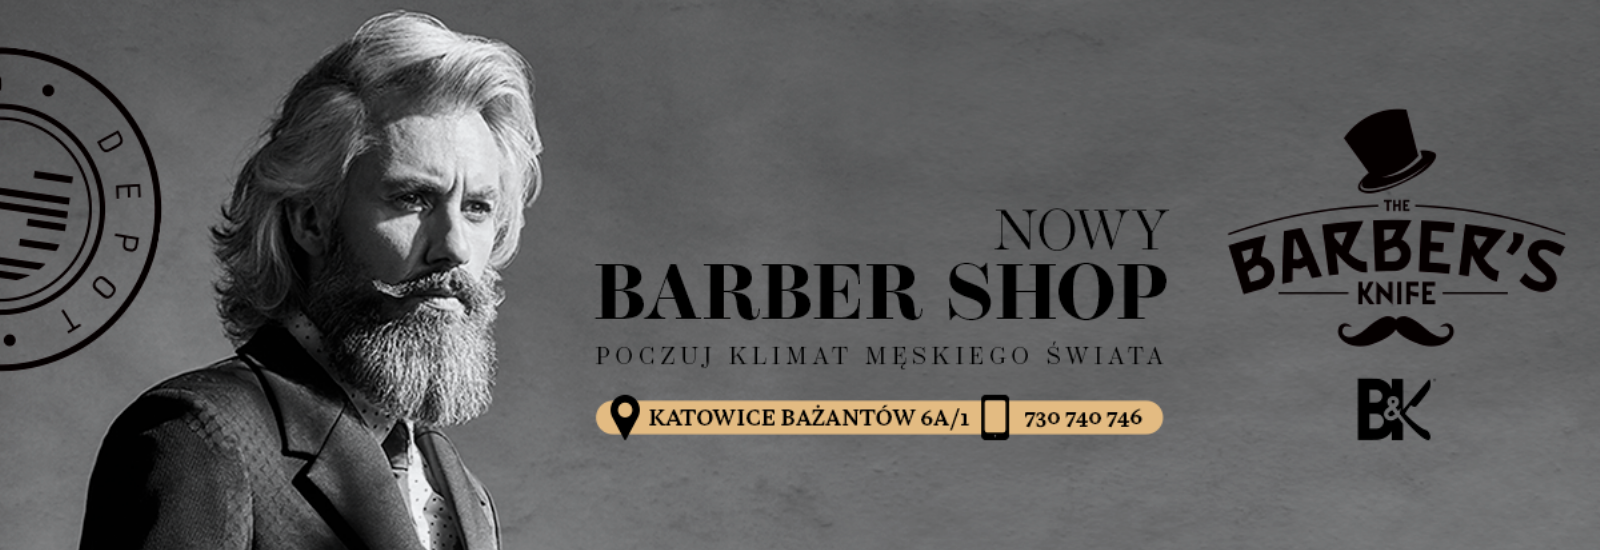 The Barber's Knife Bażantów